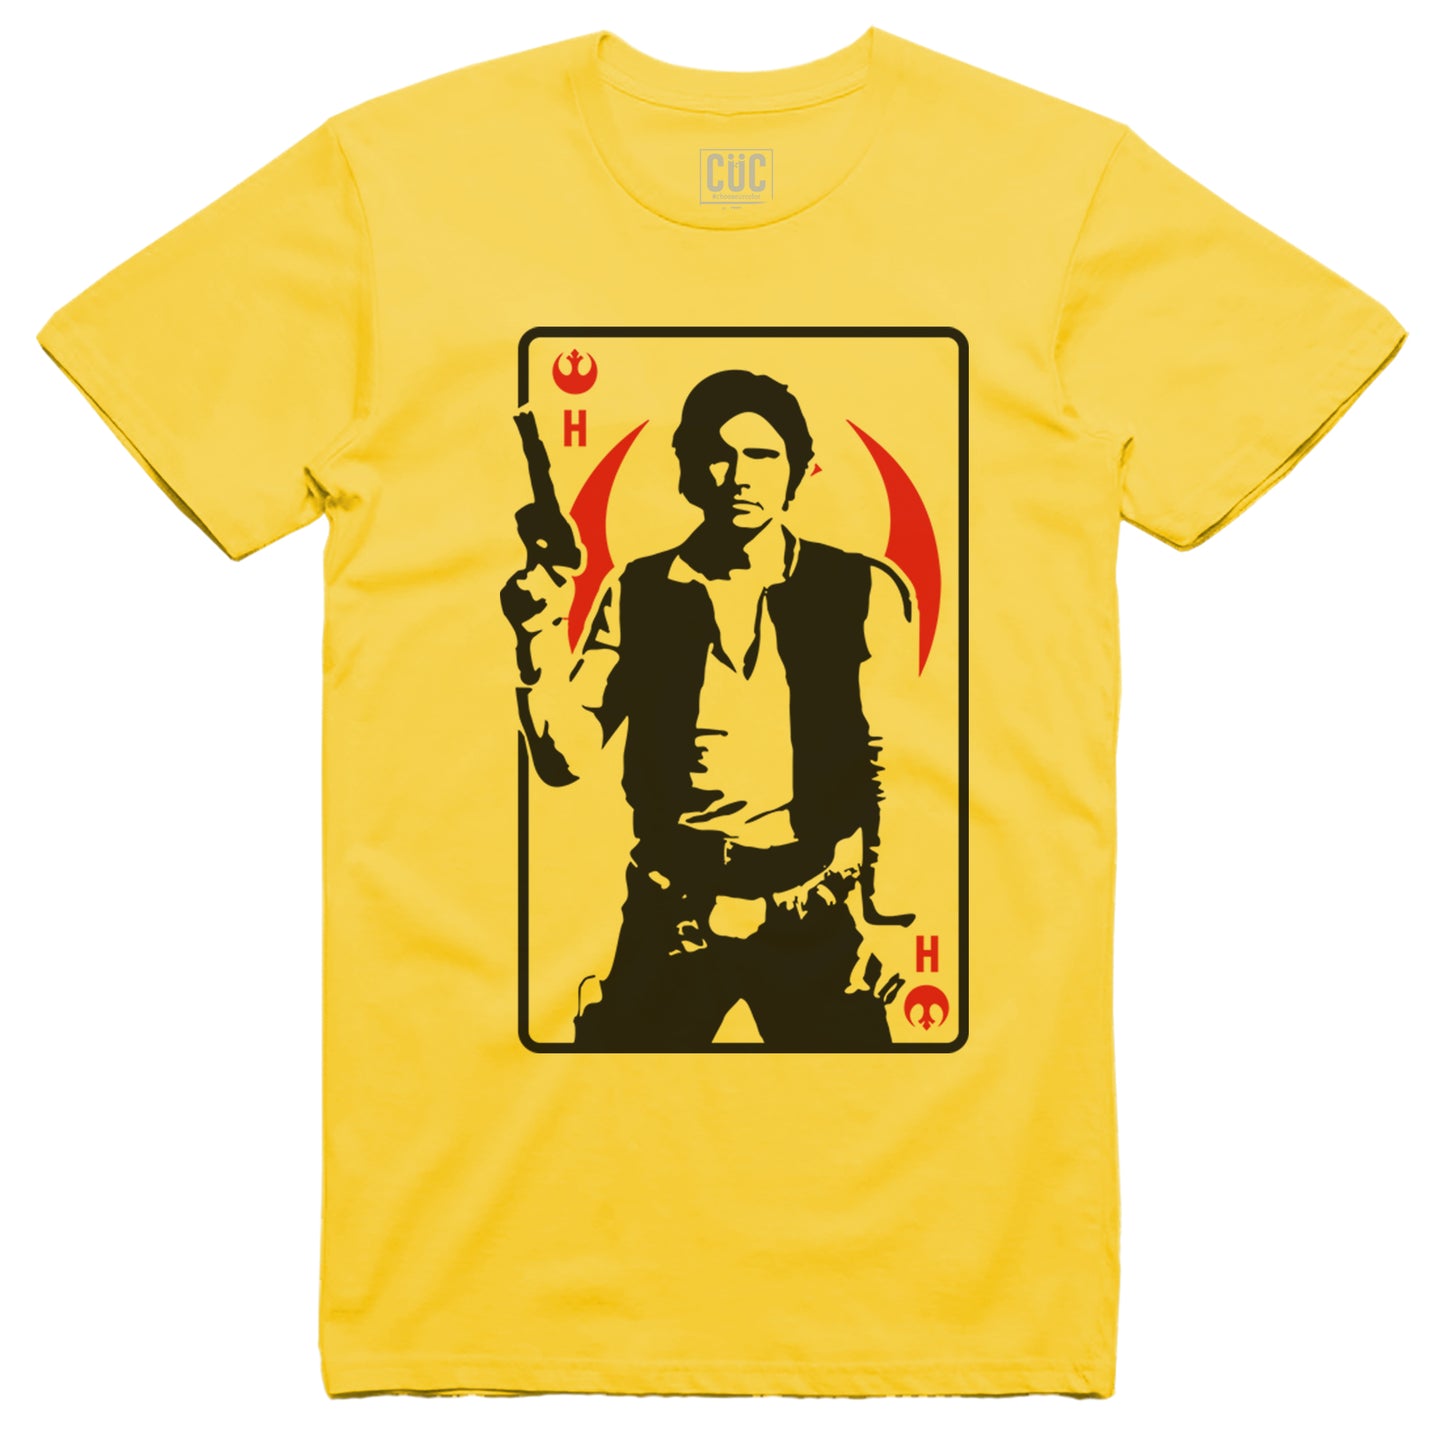 CUC T-Shirt Han Solo Card - Cult Movie - #chooseurcolor - CUC chooseurcolor